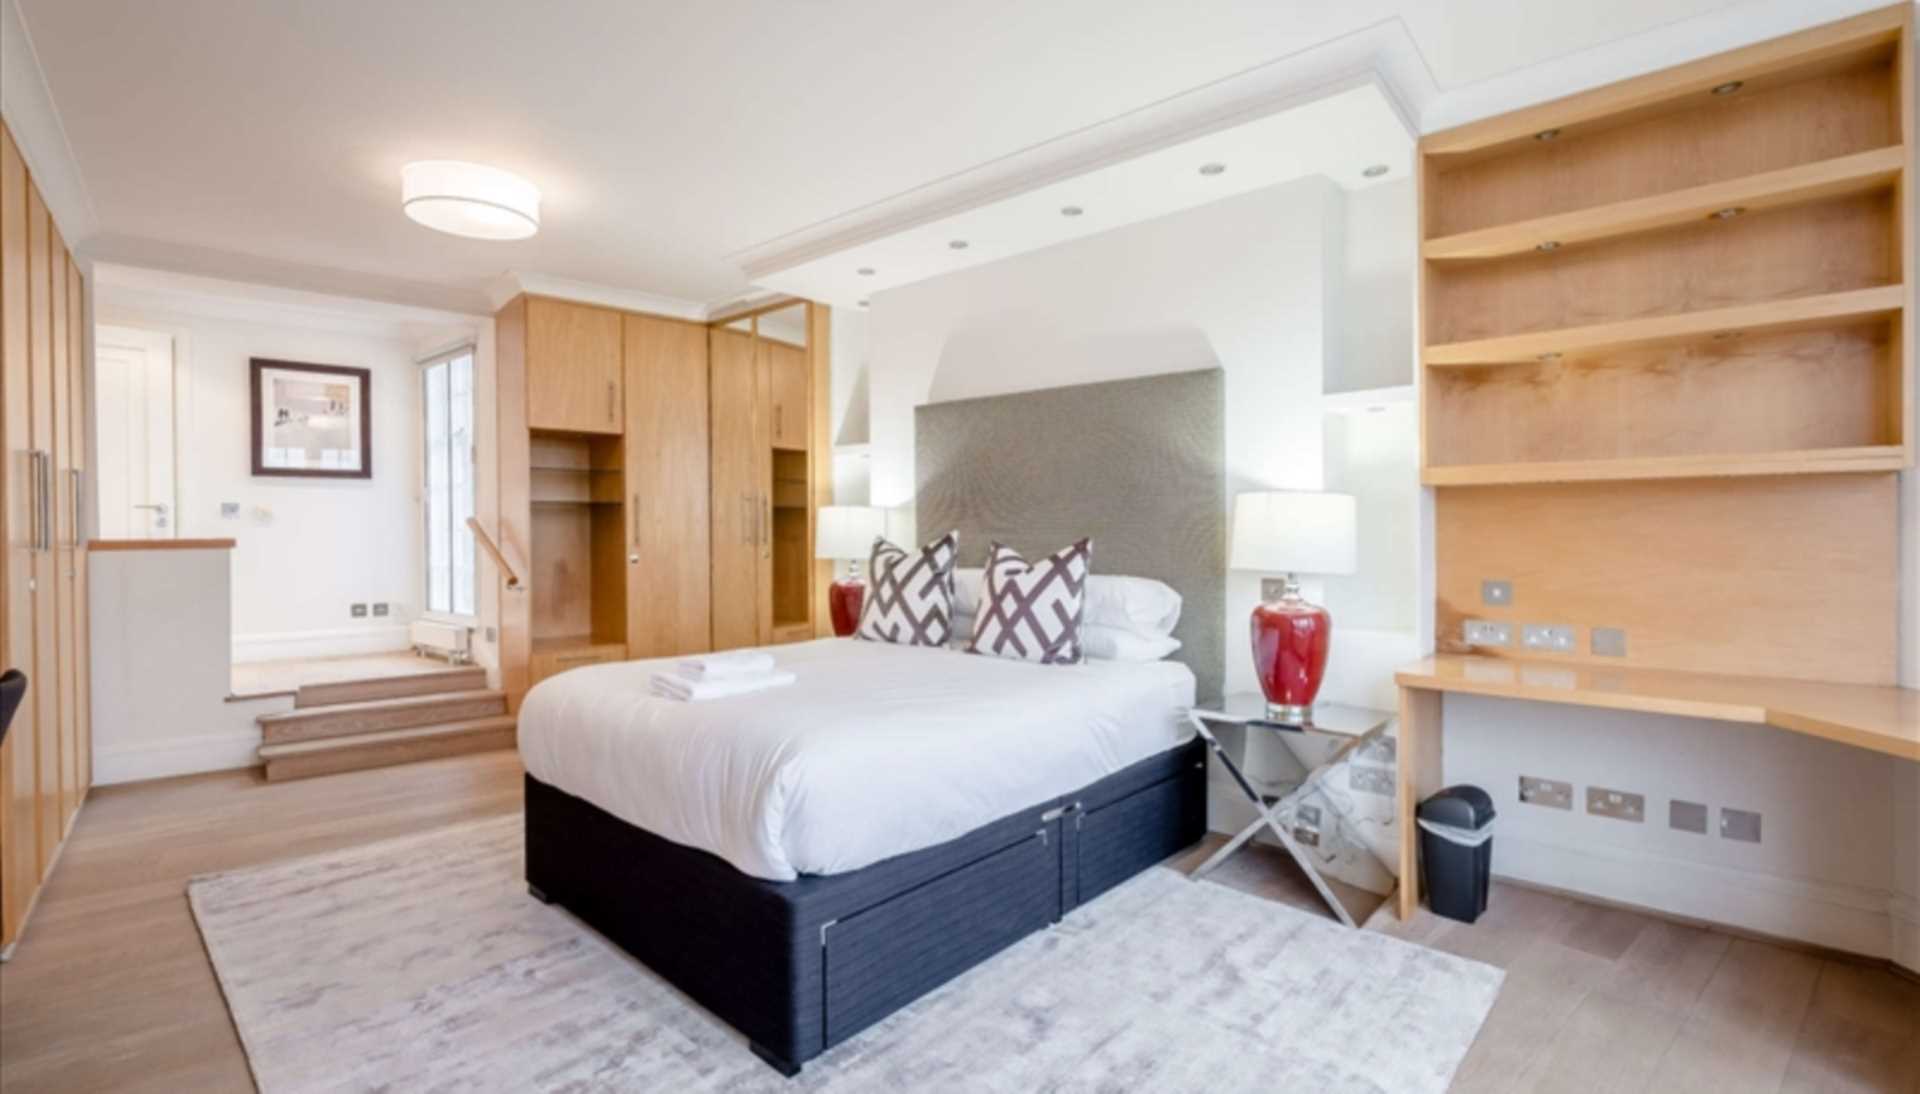 London NW8 7HY 4 bed flat rental property internal/external image-6